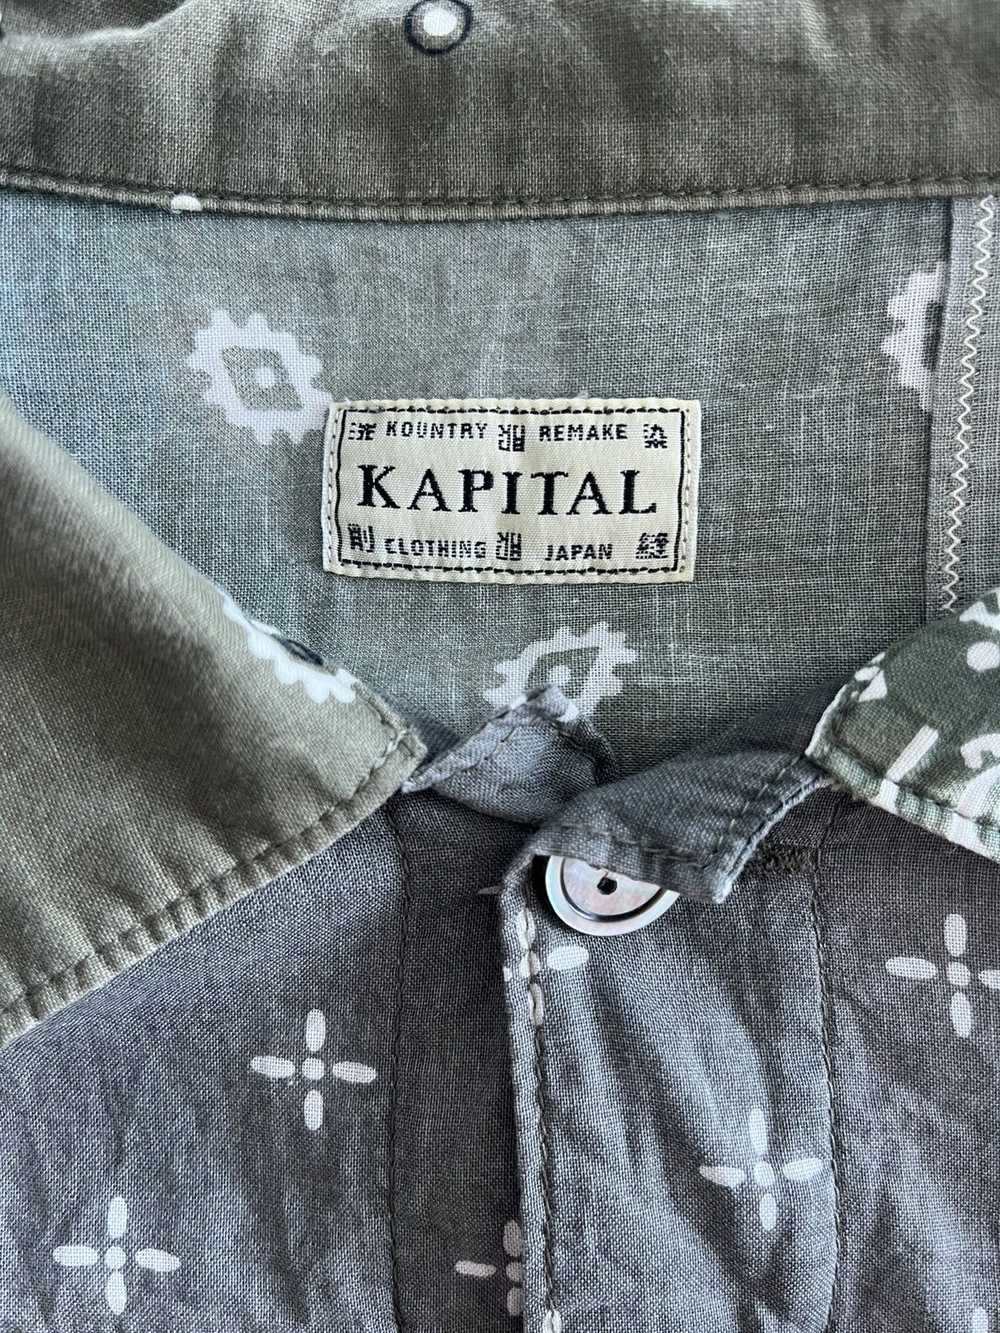 Kapital kapital bandana shirt OLIVE GREEN - image 3